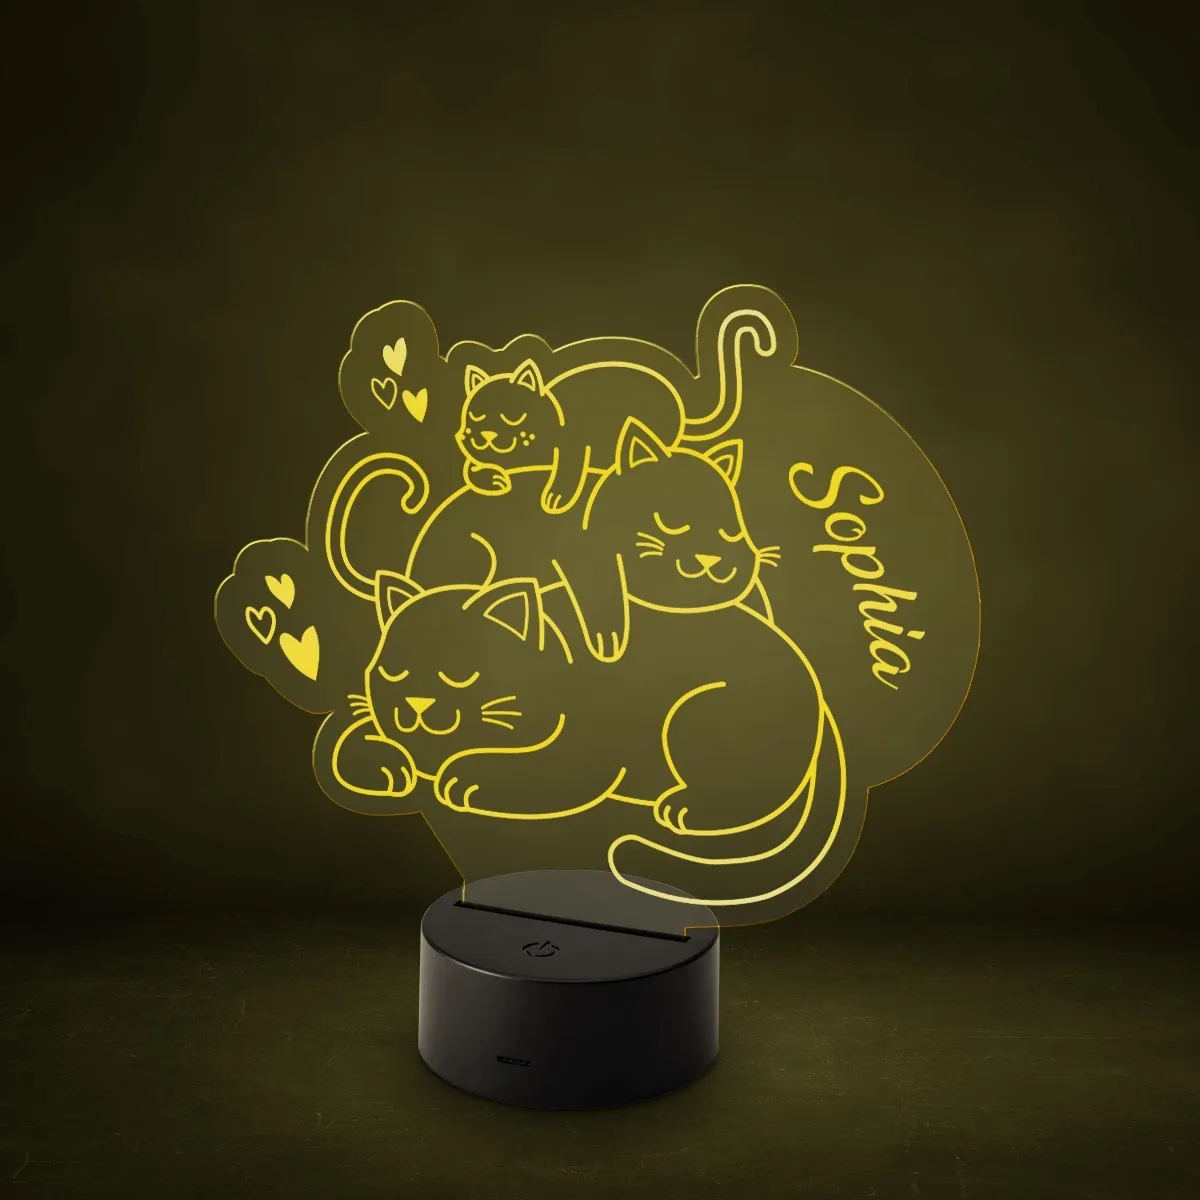 Acrylglasschild LED-Lampe personalisiert - Schlafkatzen